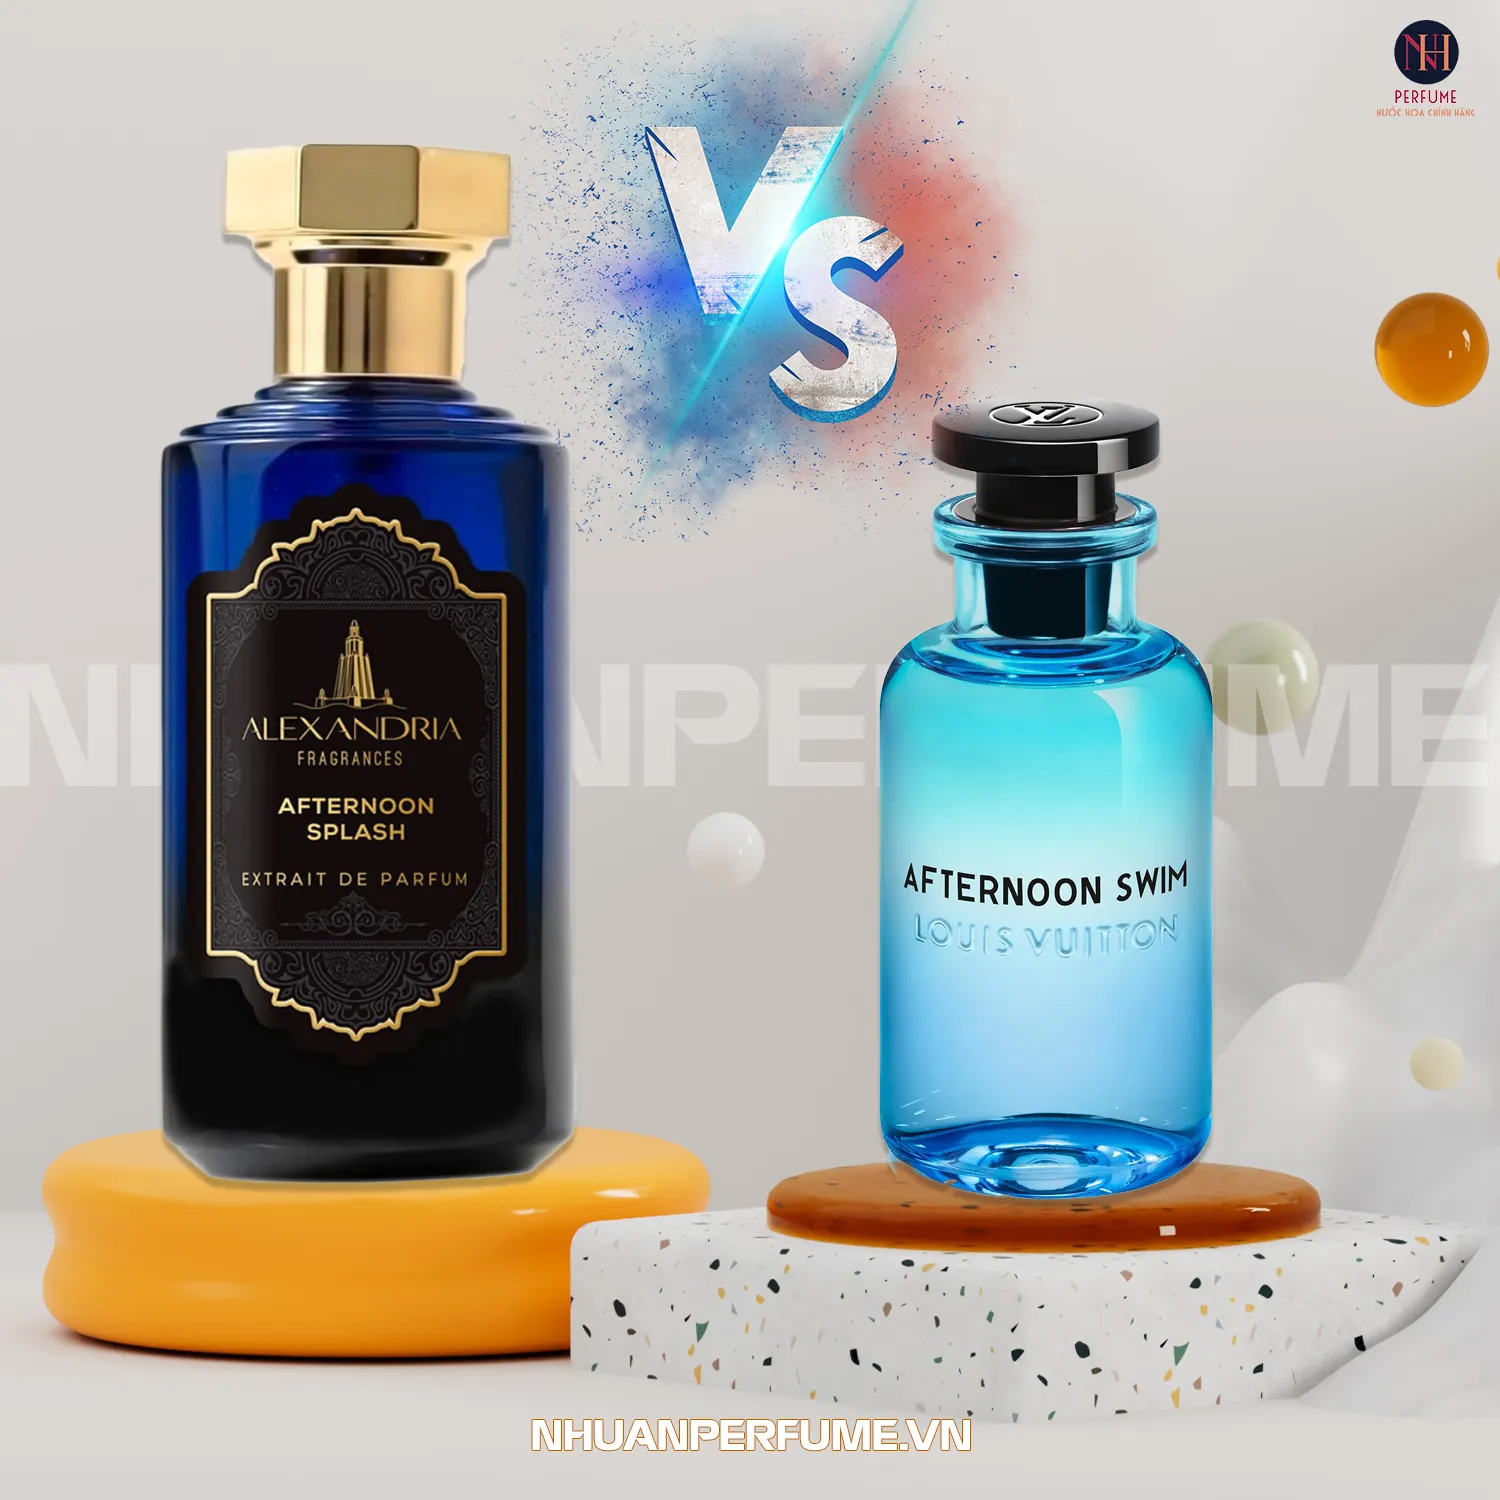 Nước Hoa Unisex Alexandria Fragrances Afternoon Splash Inspired by Louis  Vuitton Afternoon Swim - Nhuận Perfume - Nước hoa chính hãng